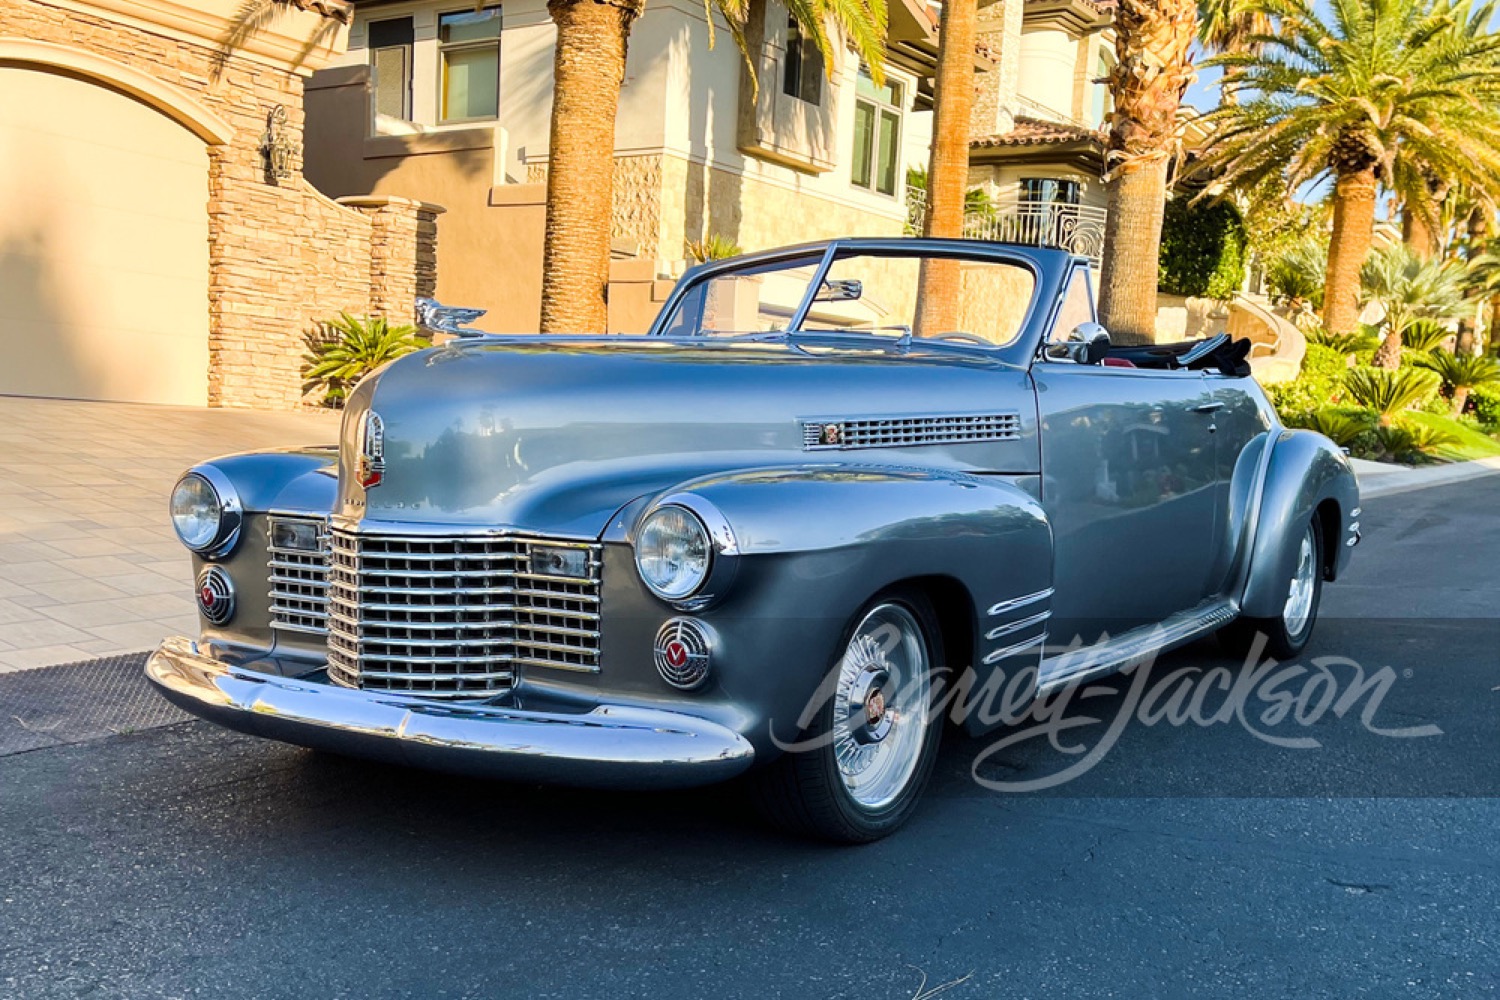 1941 Cadillac Series 62 Restomod Sells For $385K: Video